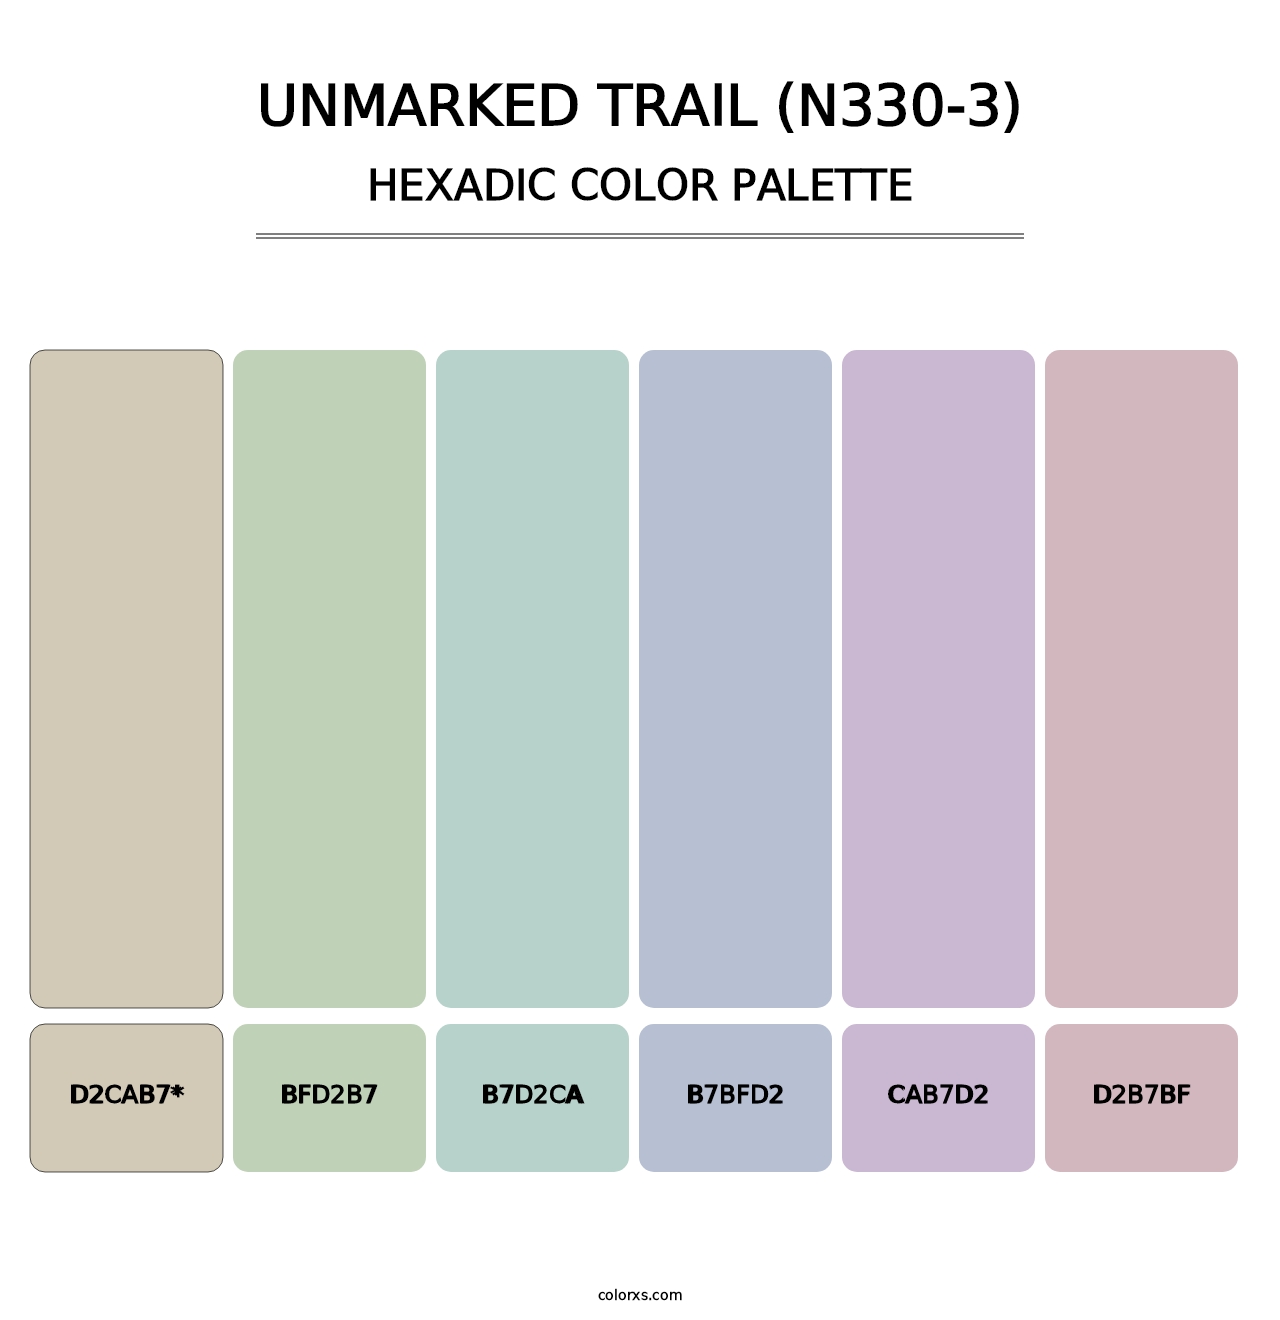 Unmarked Trail (N330-3) - Hexadic Color Palette